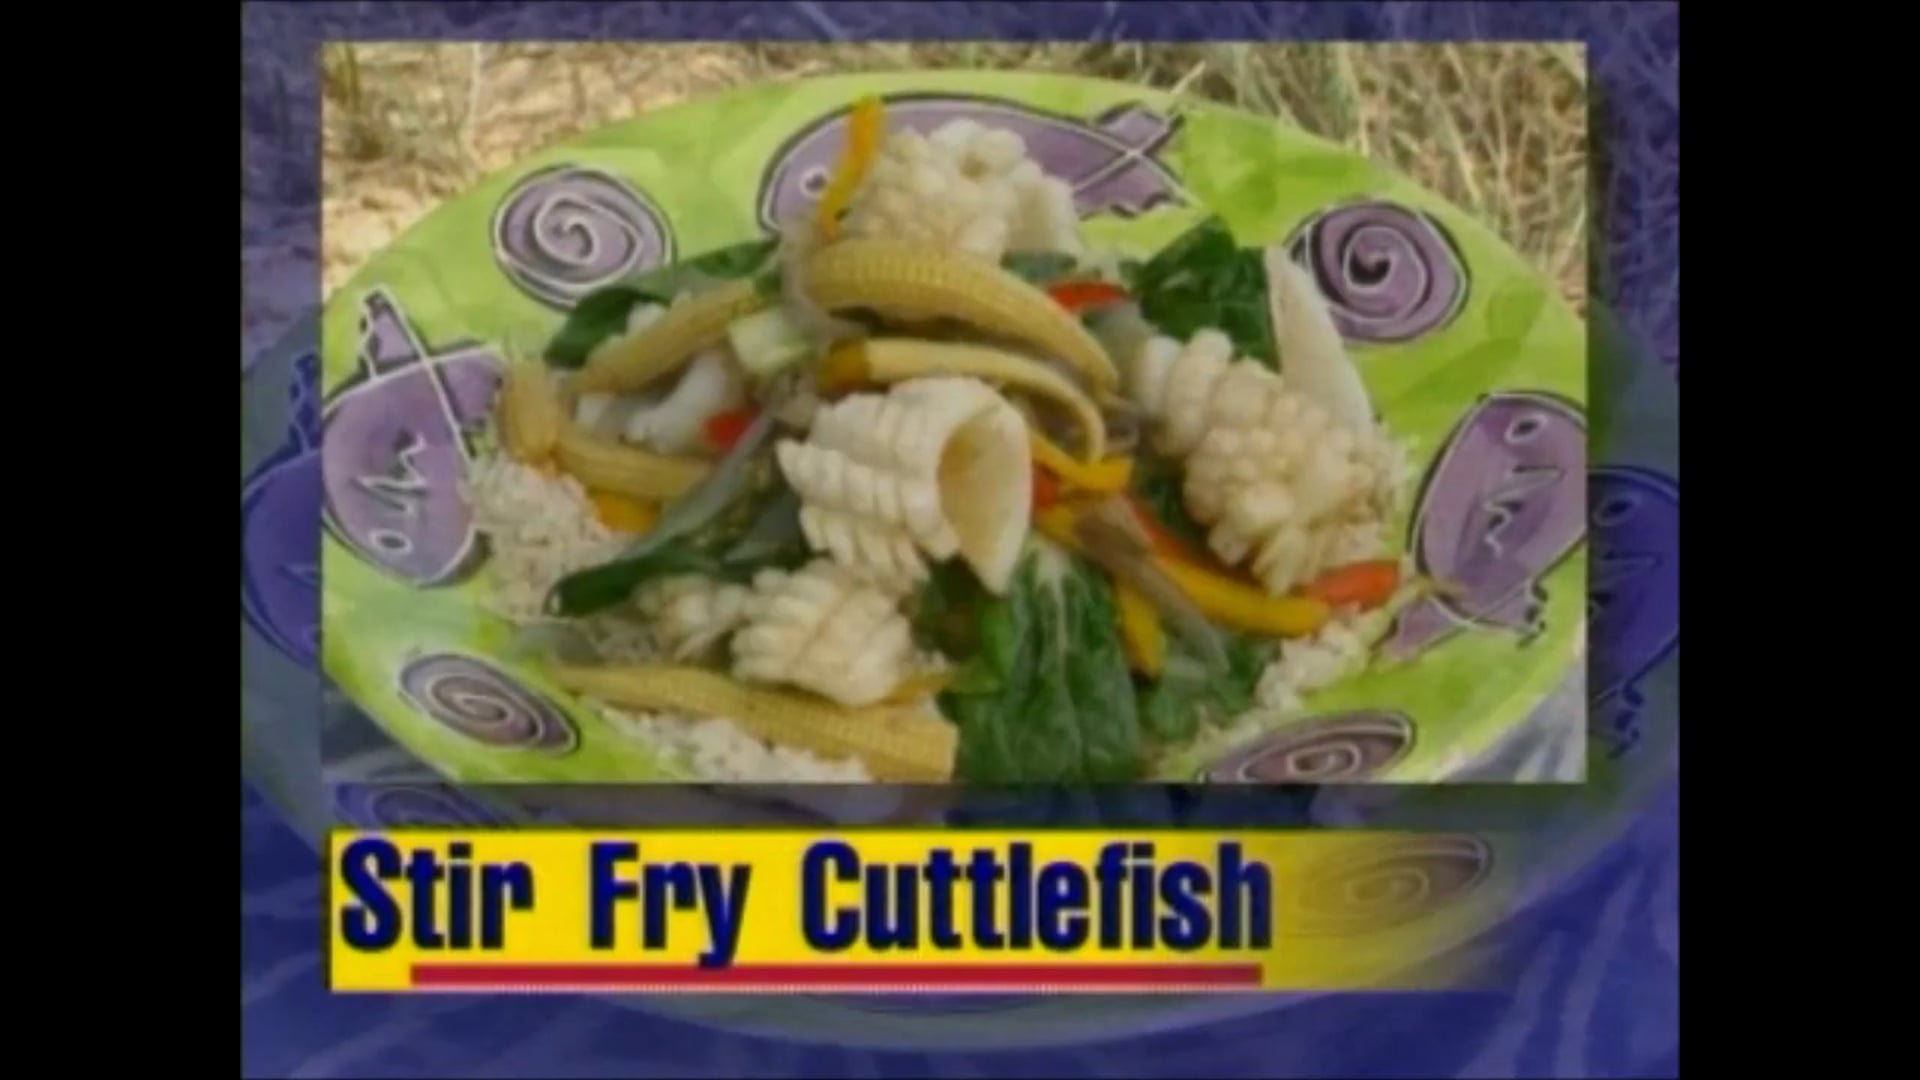 Stir Fry Cuttlefish – Sally Jenyns